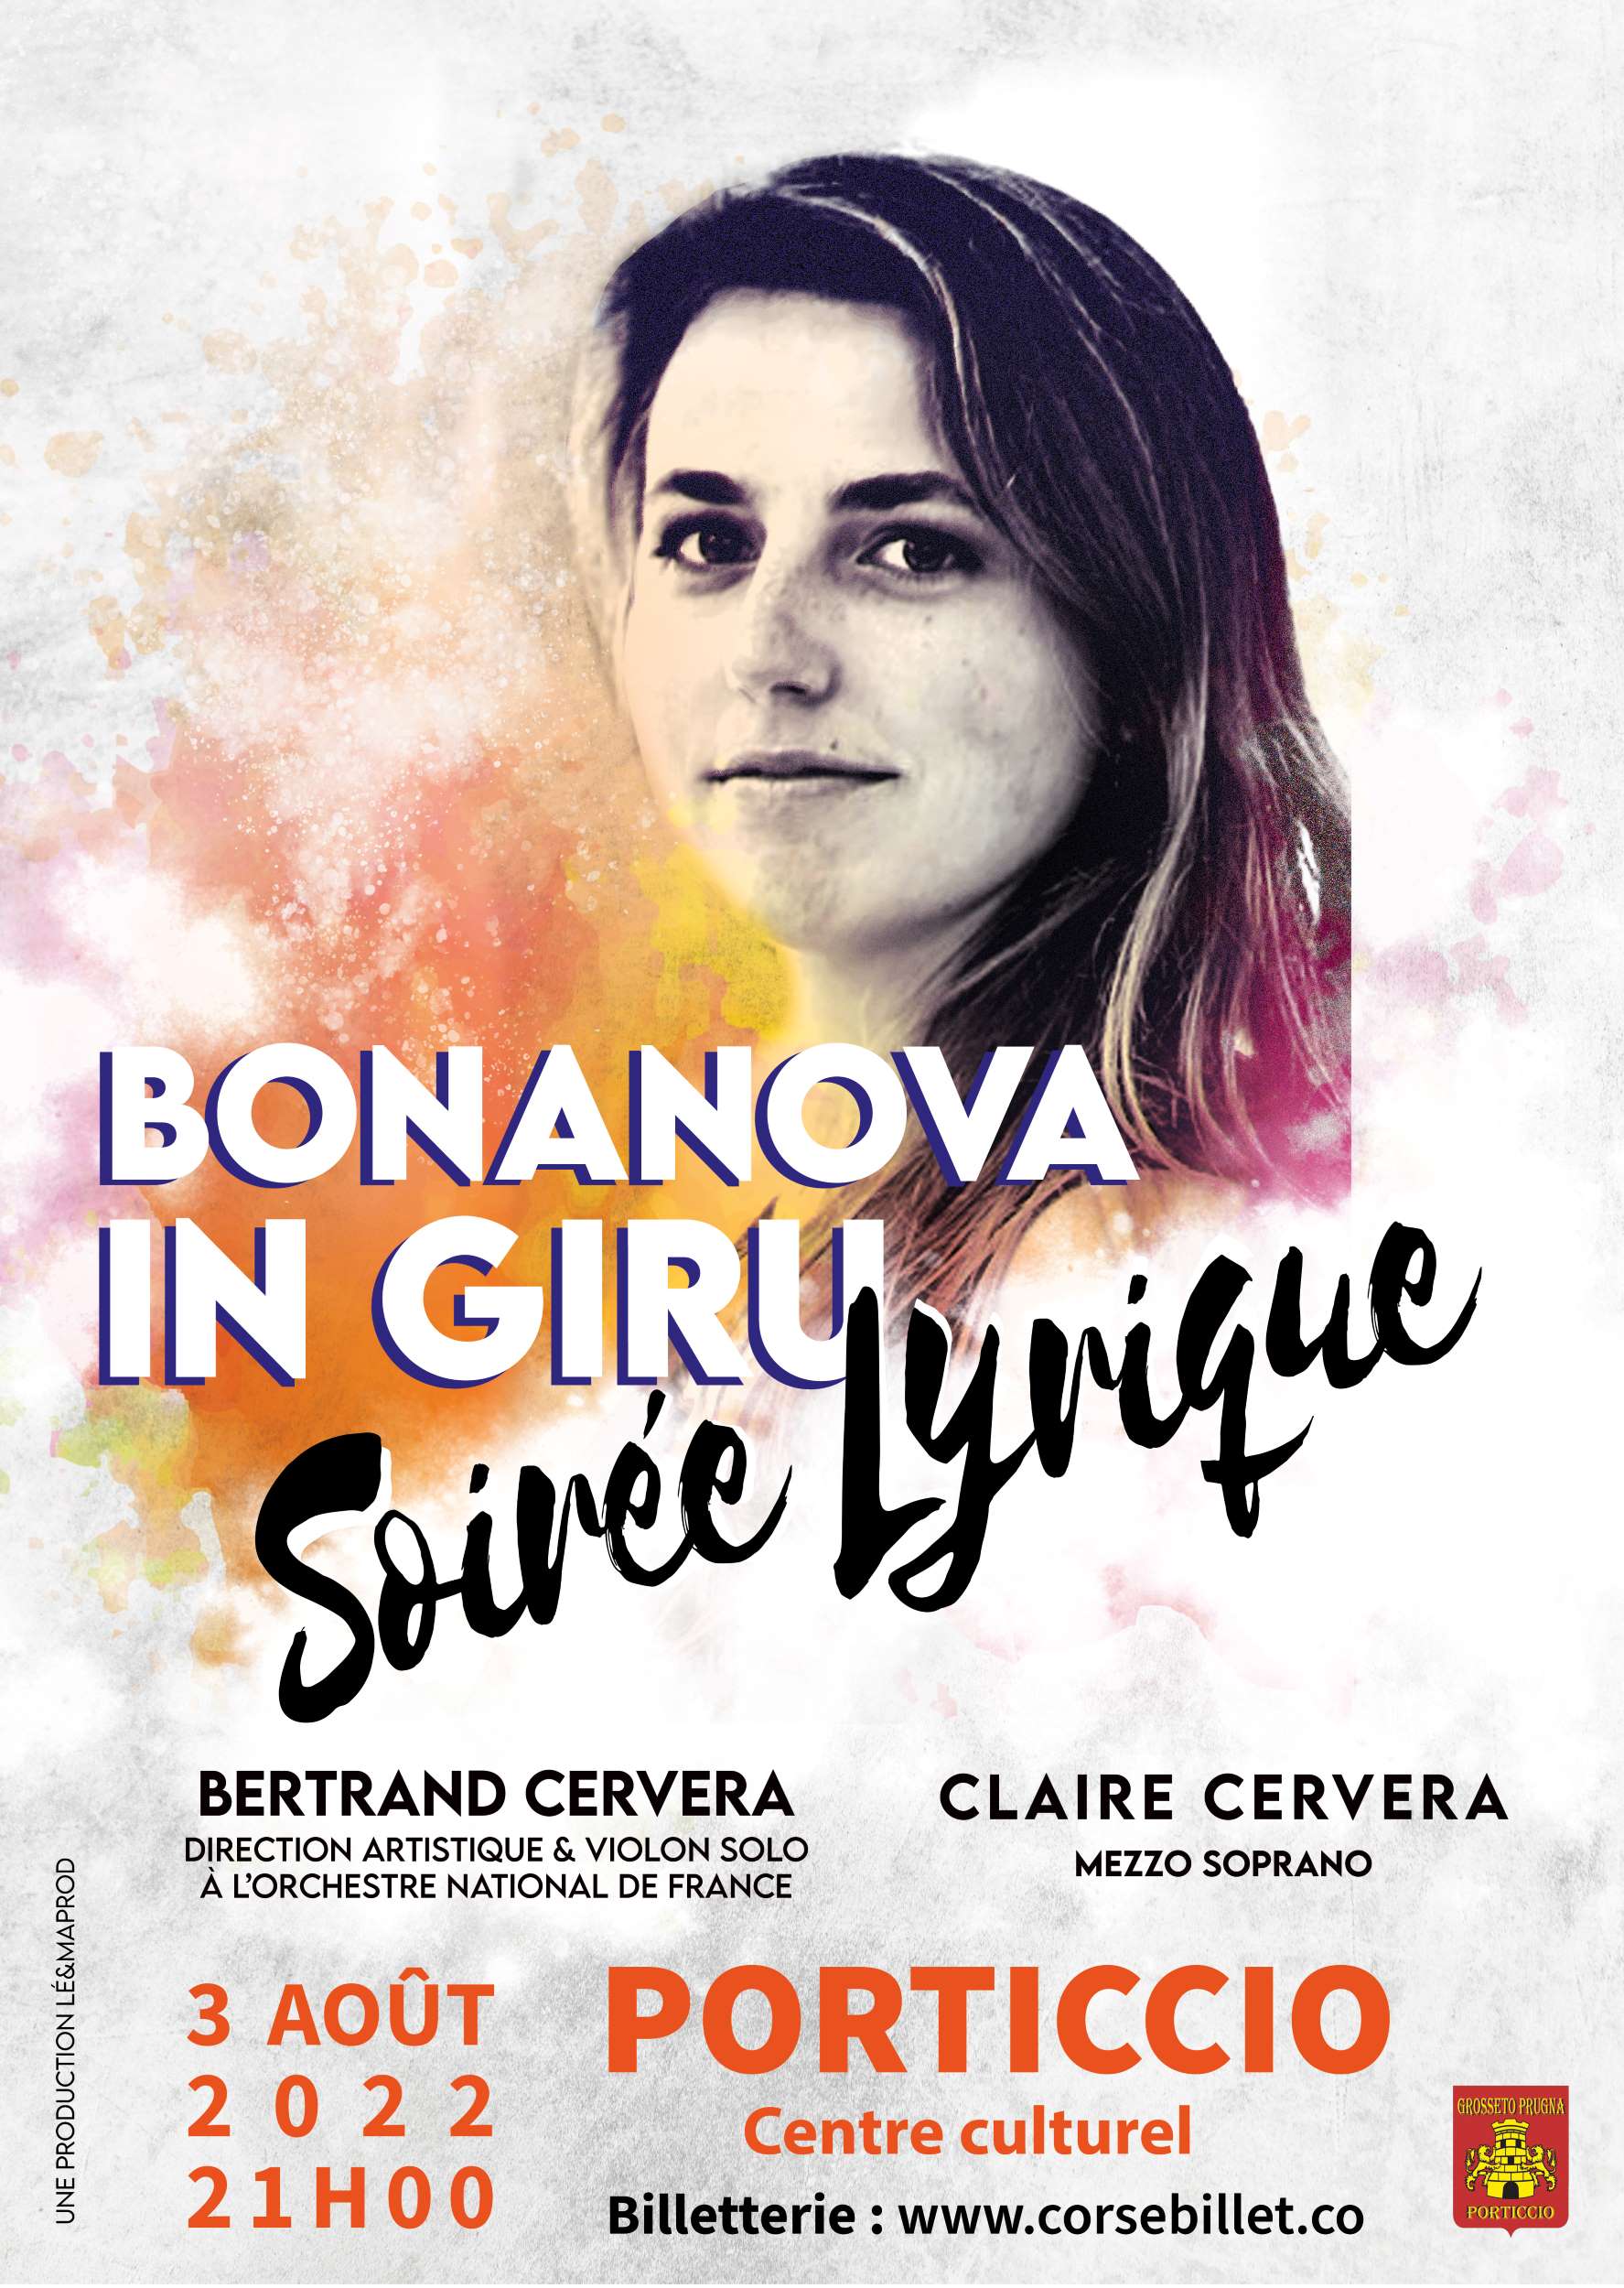 Bonanova in Giru Soirée Lyrique